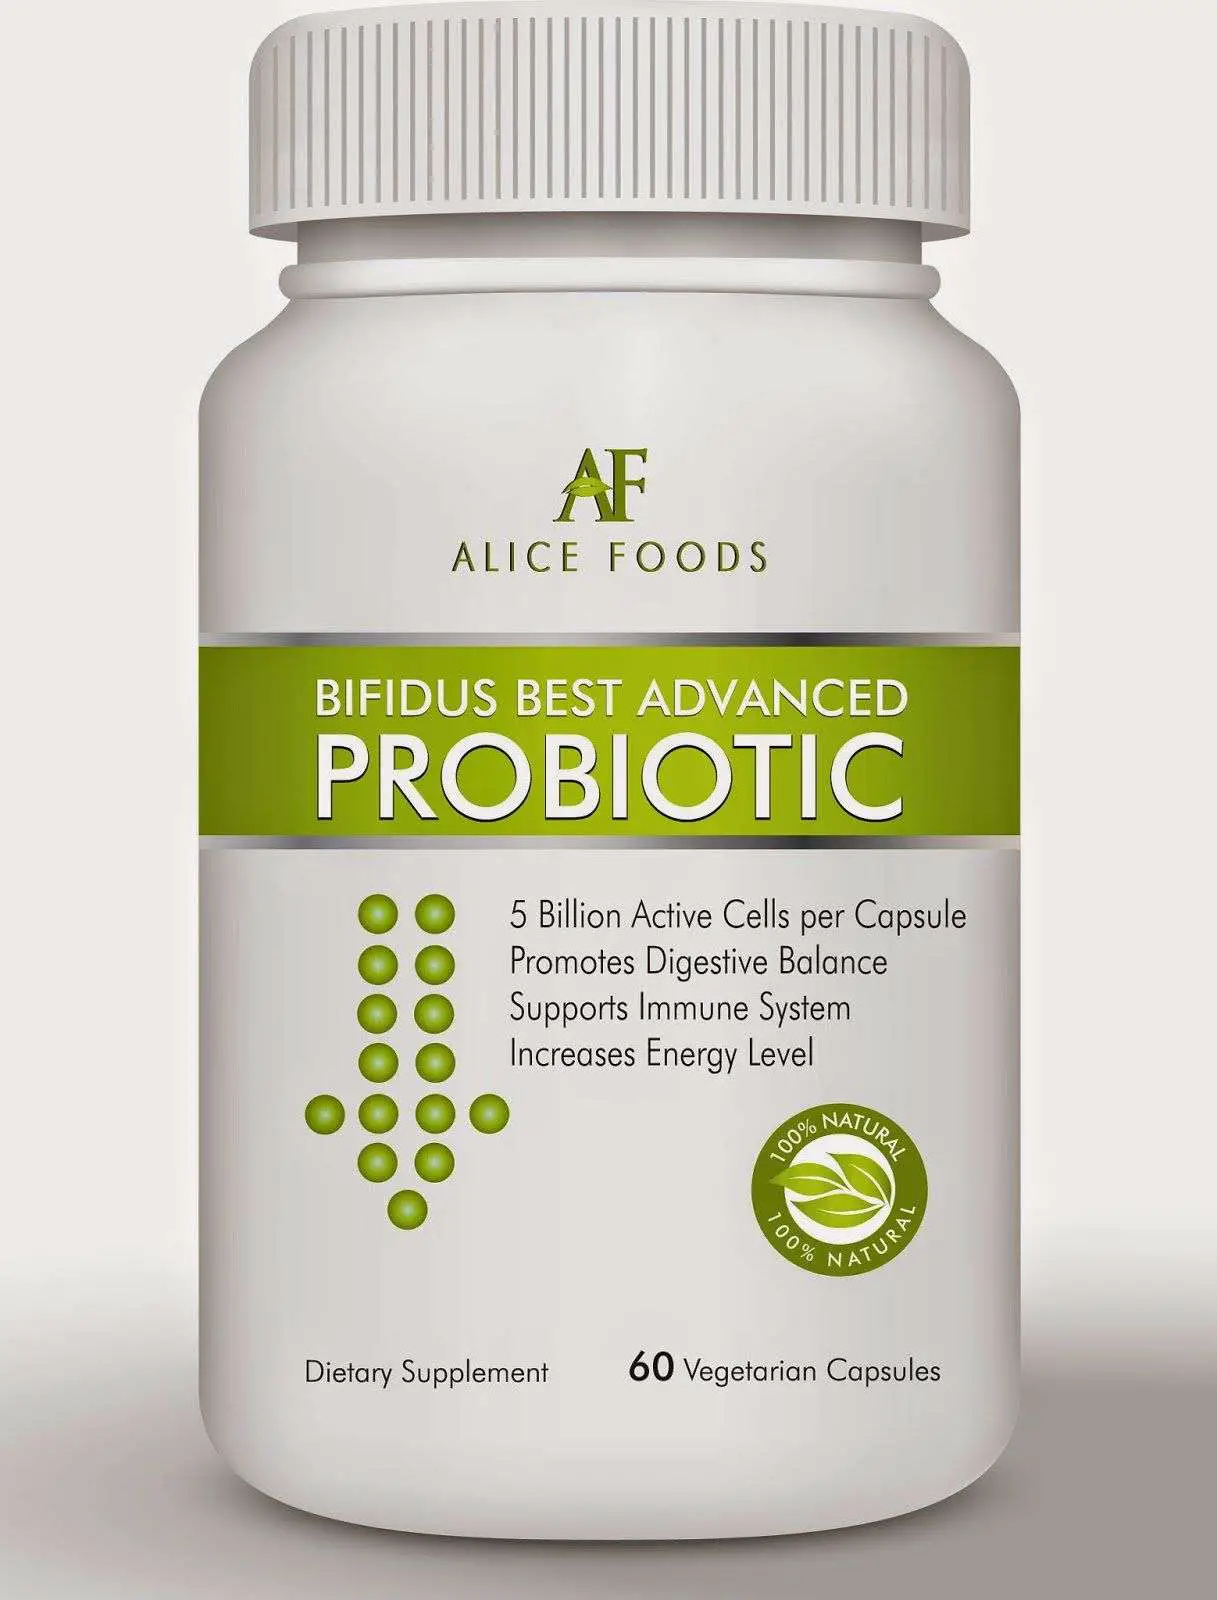 The 25+ best Probiotic supplements ideas on Pinterest ...